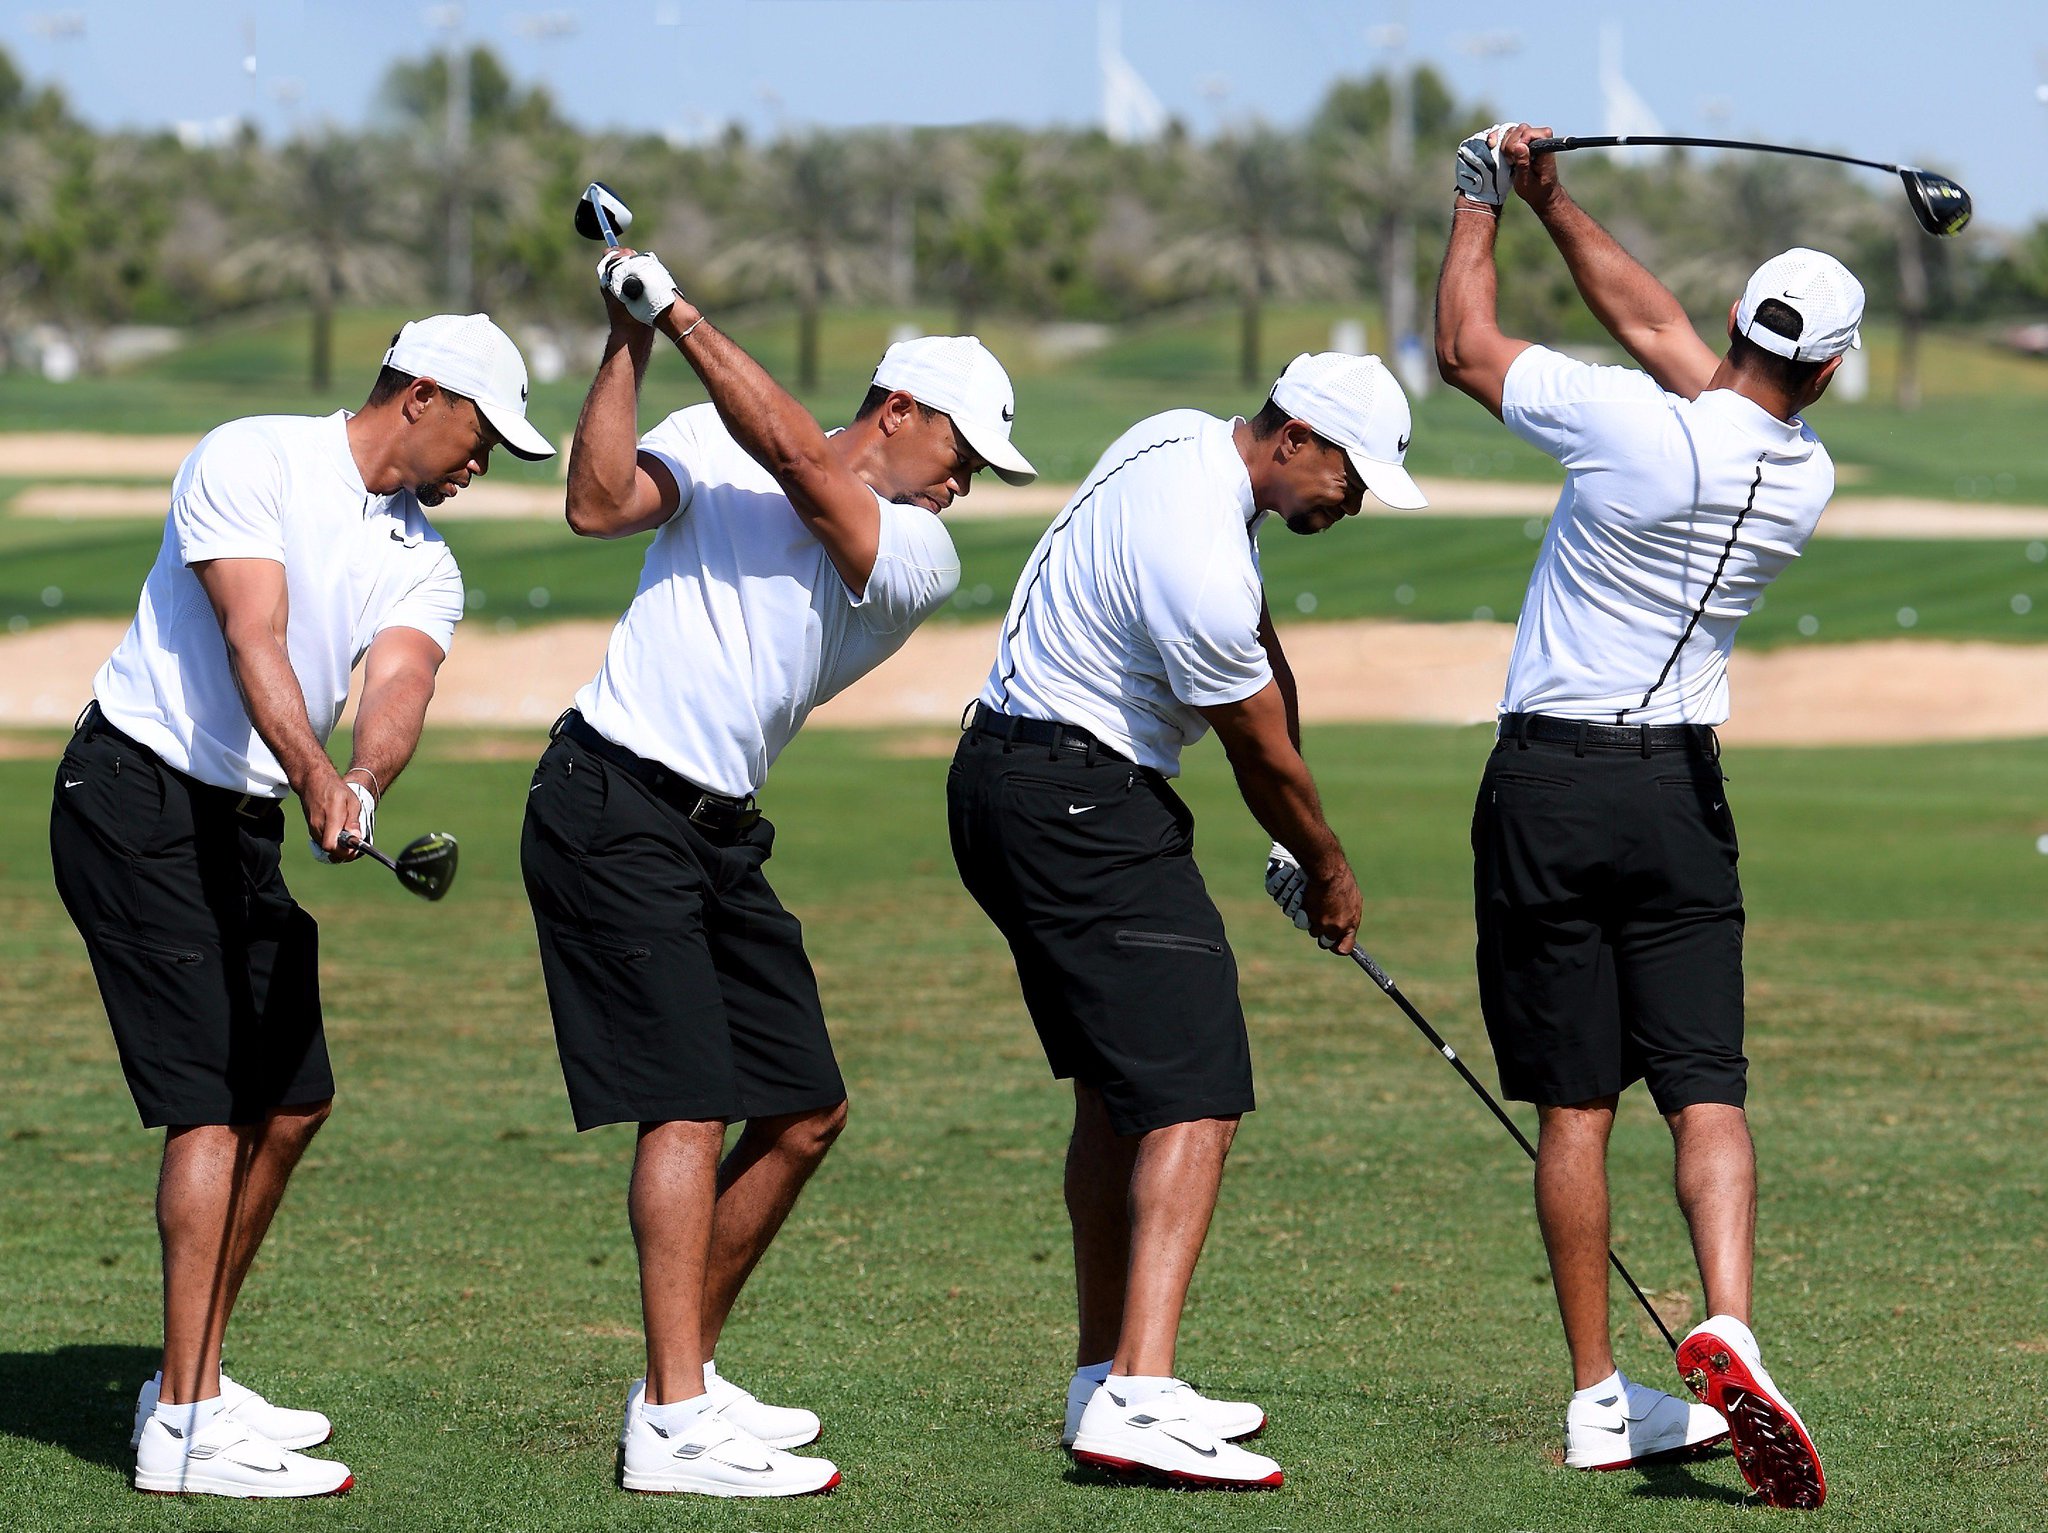 Tiger Woods off to sluggish start at PGA Championship